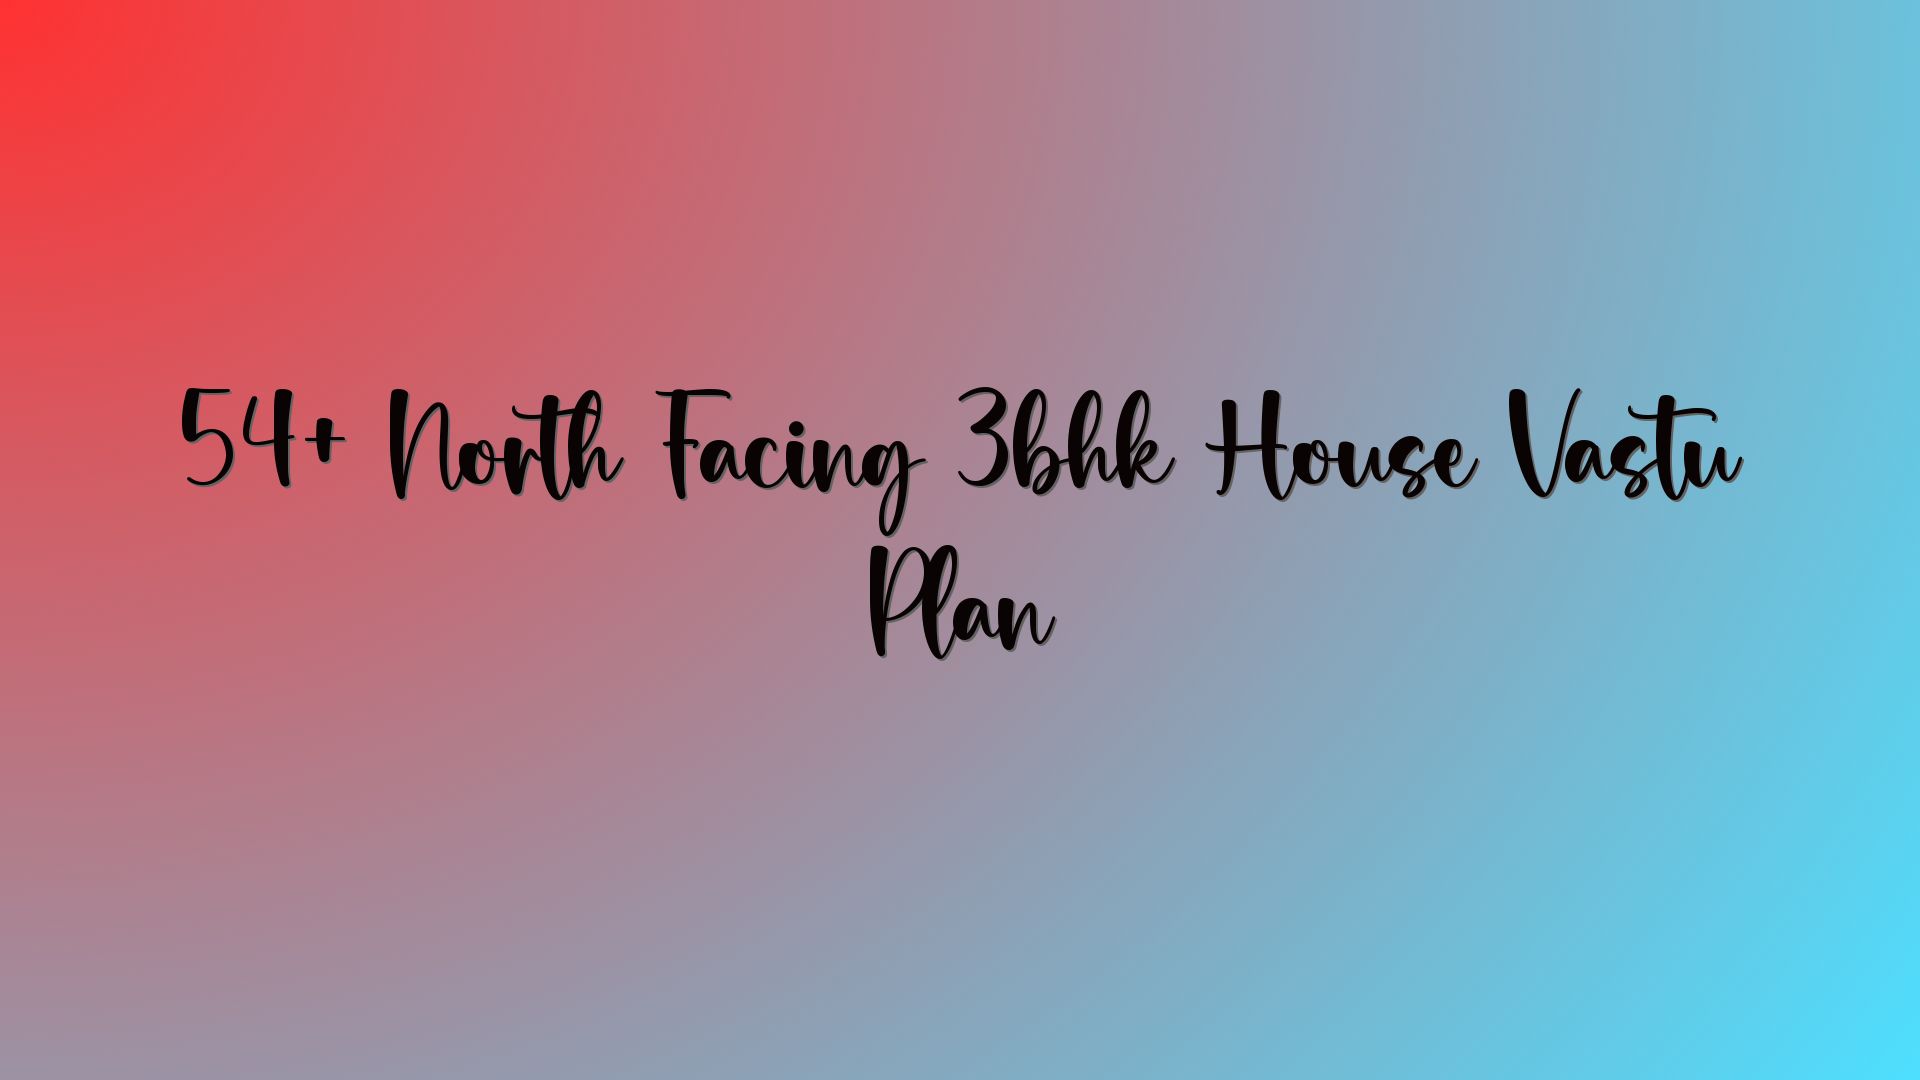 54+ North Facing 3bhk House Vastu Plan